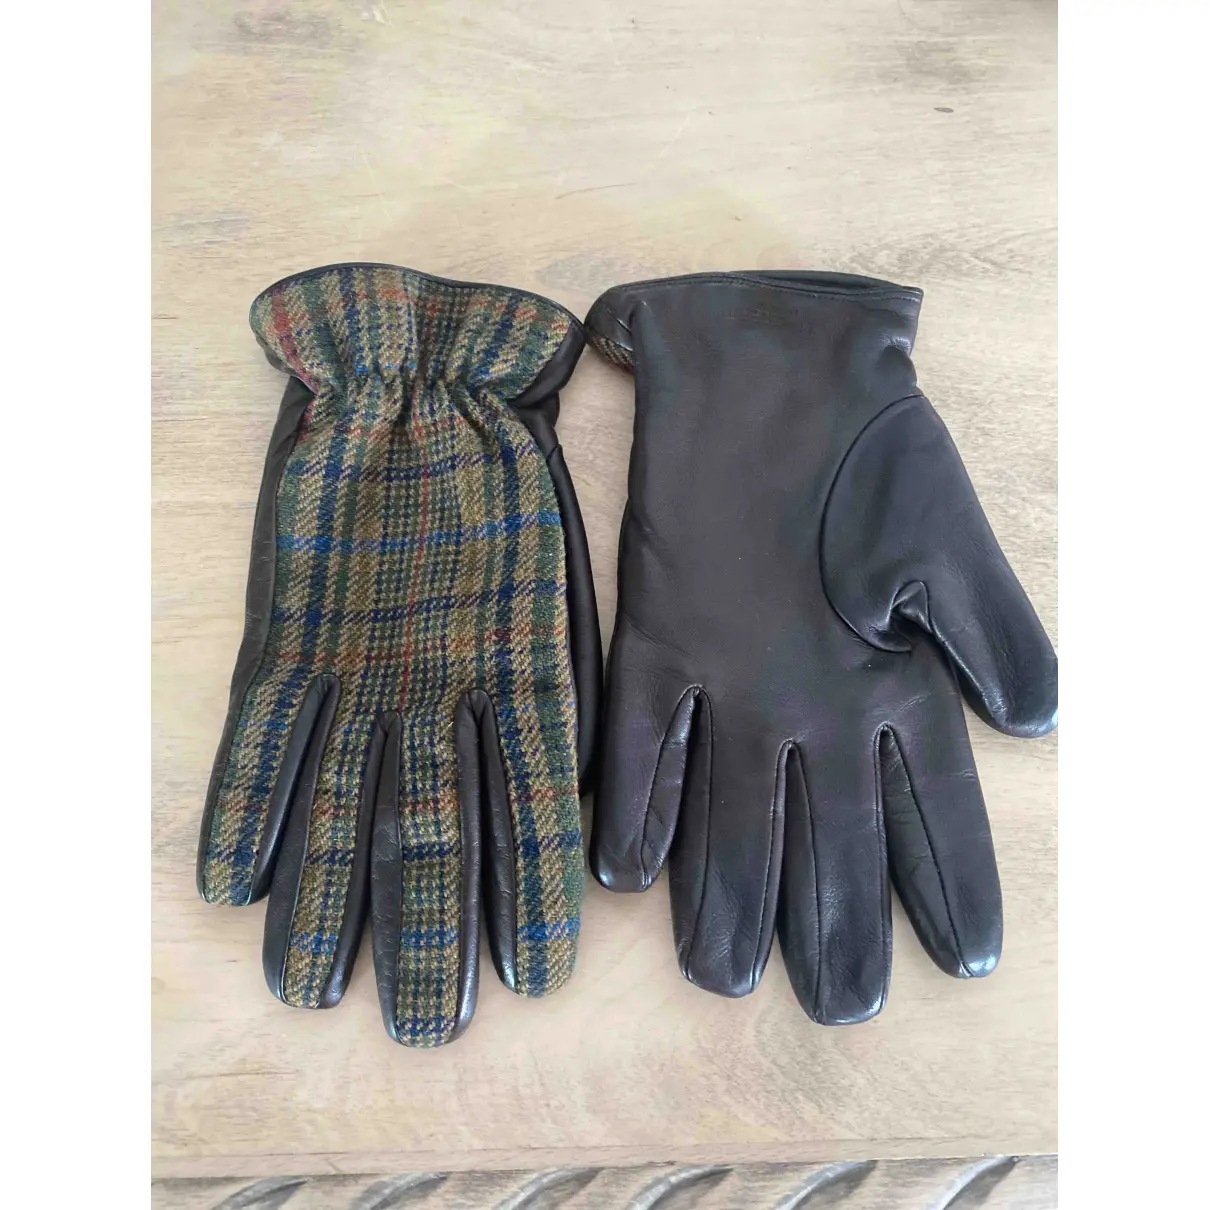 Buy Hackett London Cashmere gloves online